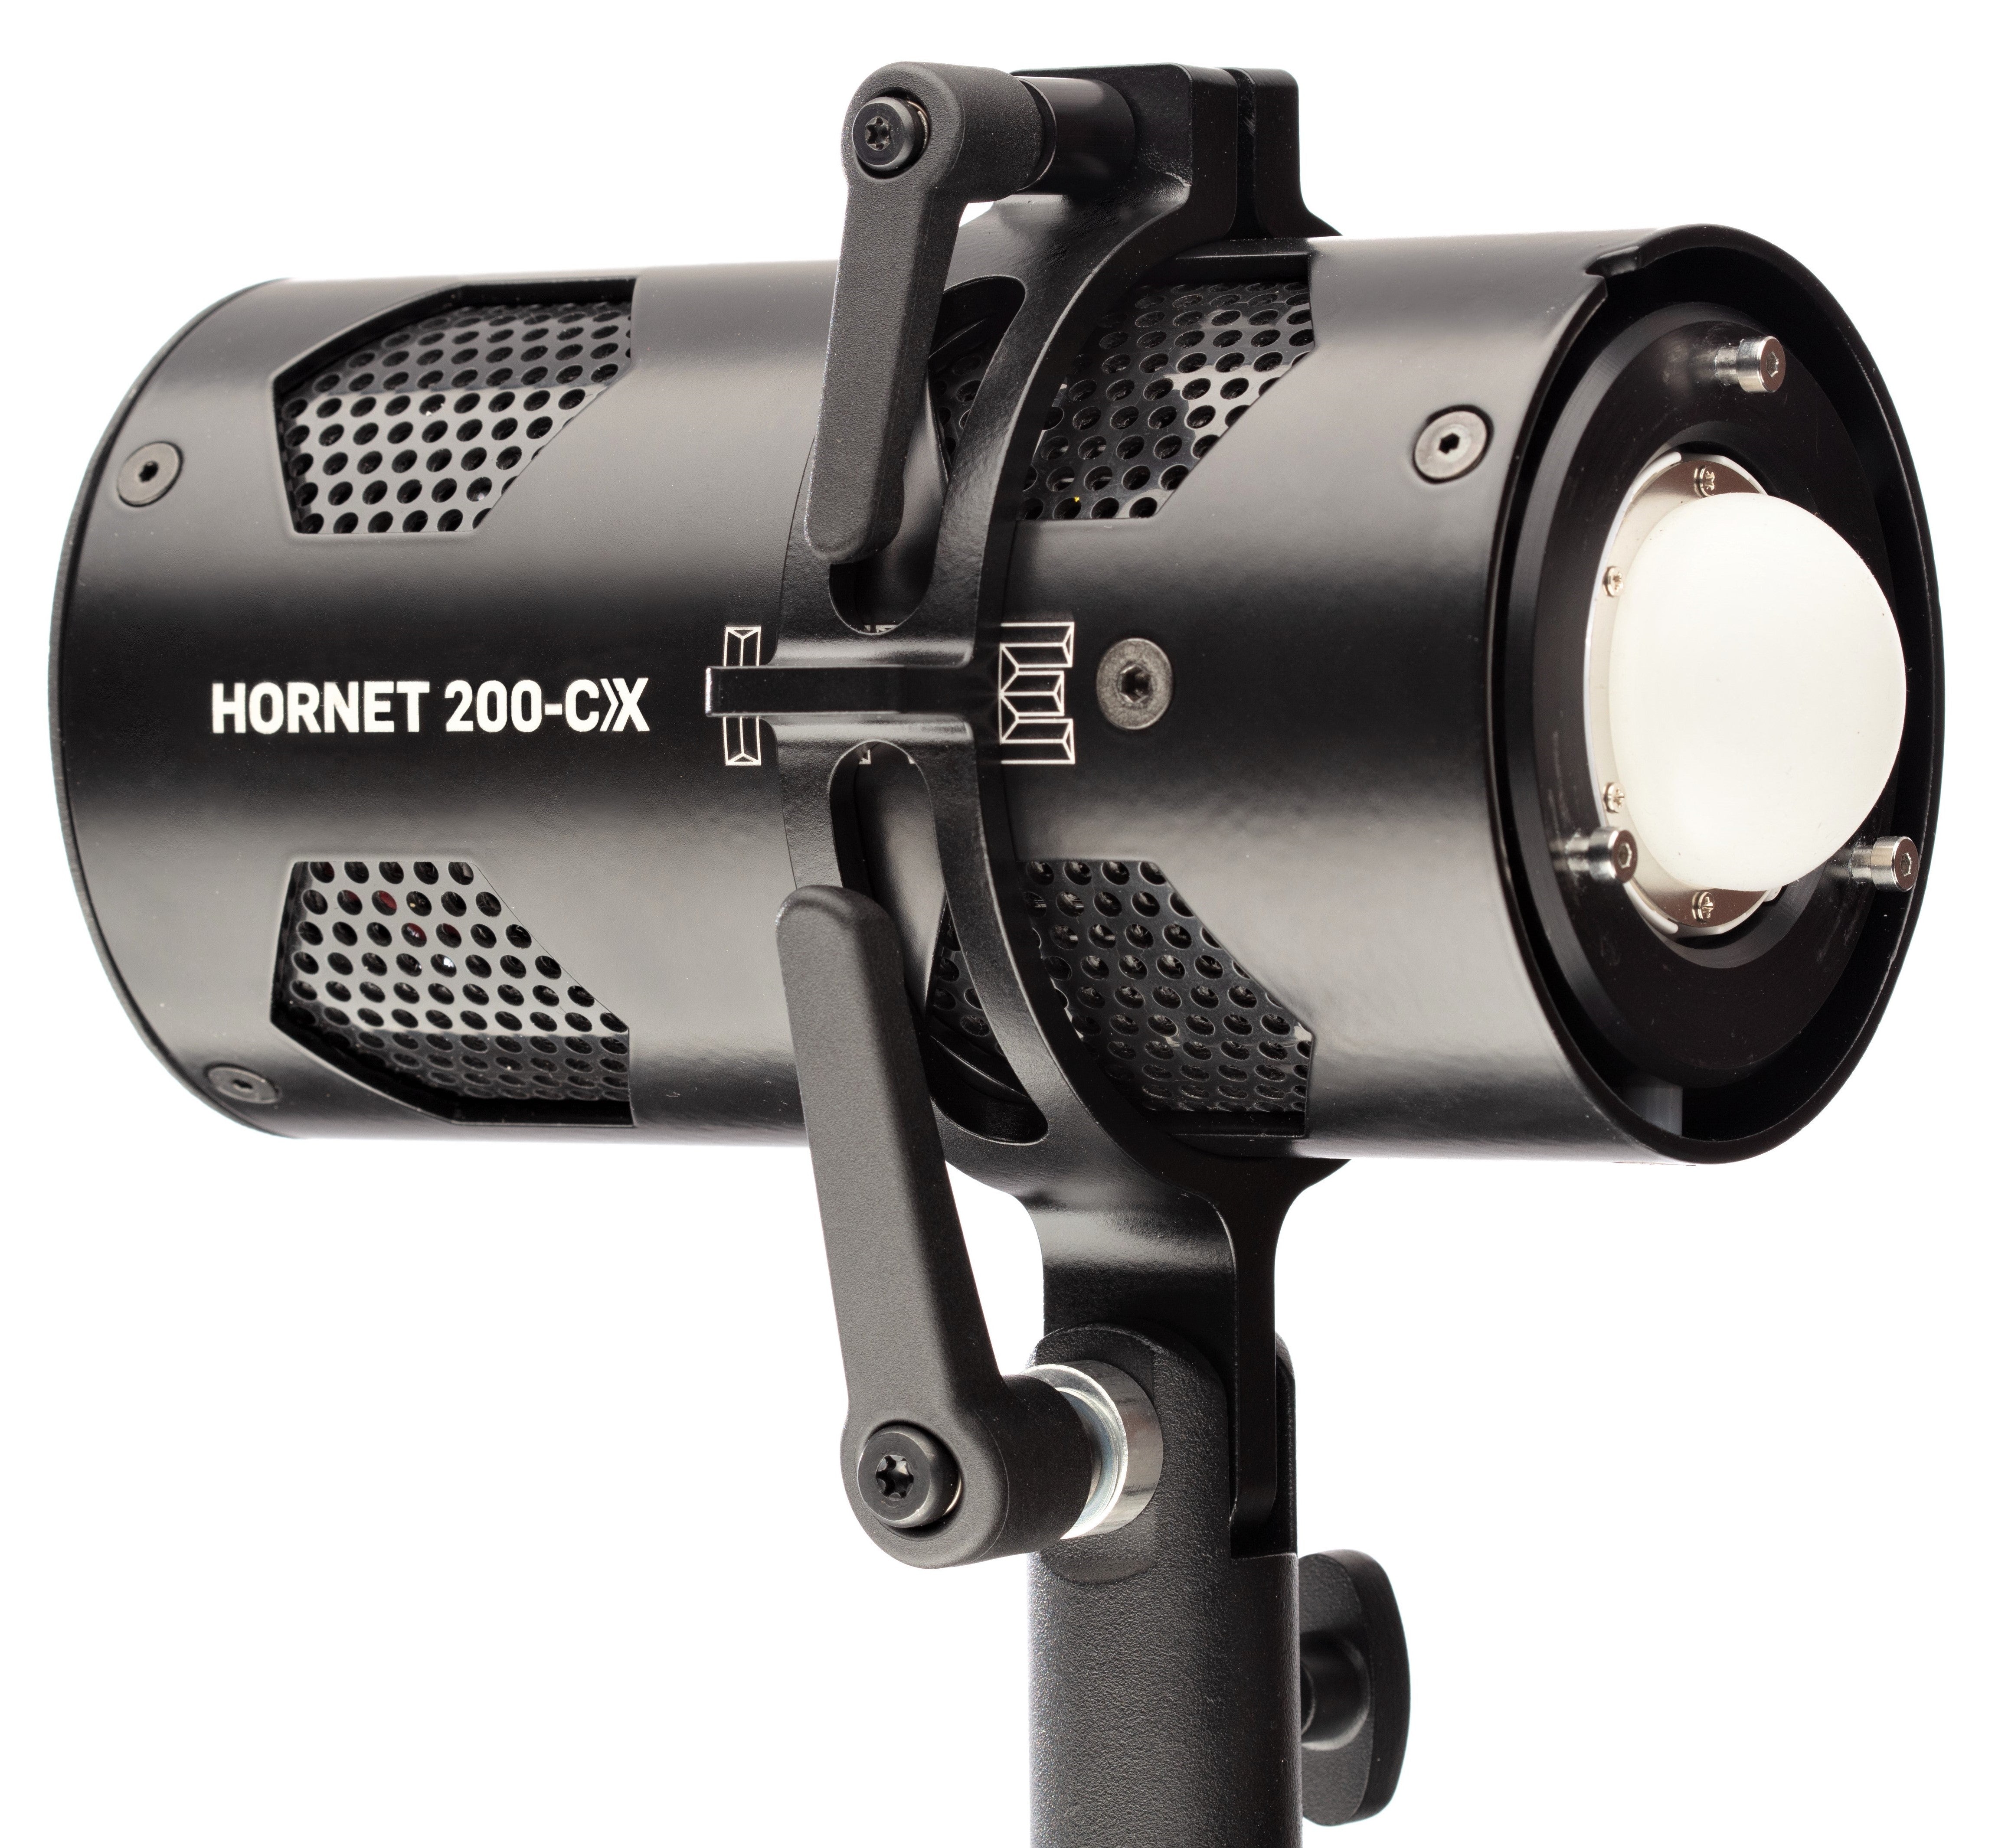 Hive Lighting Hornet 200-CX Open Face Omni-Color LED Light